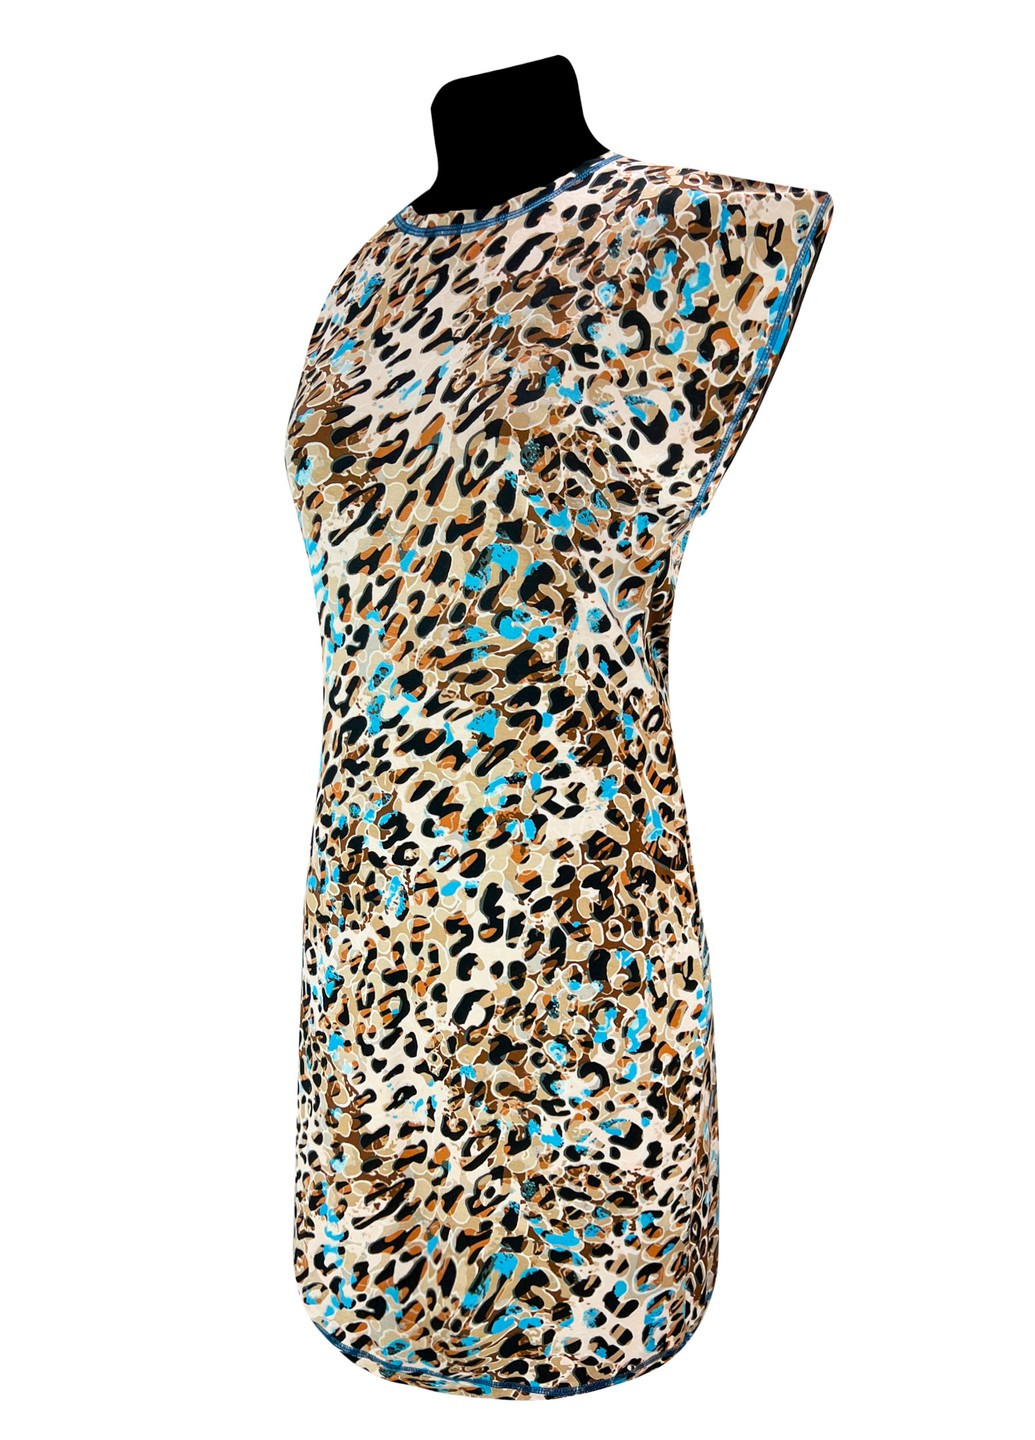 Блакитна повсякденний сукня батал віскоза леопард Жемчужина стилей леопардовий